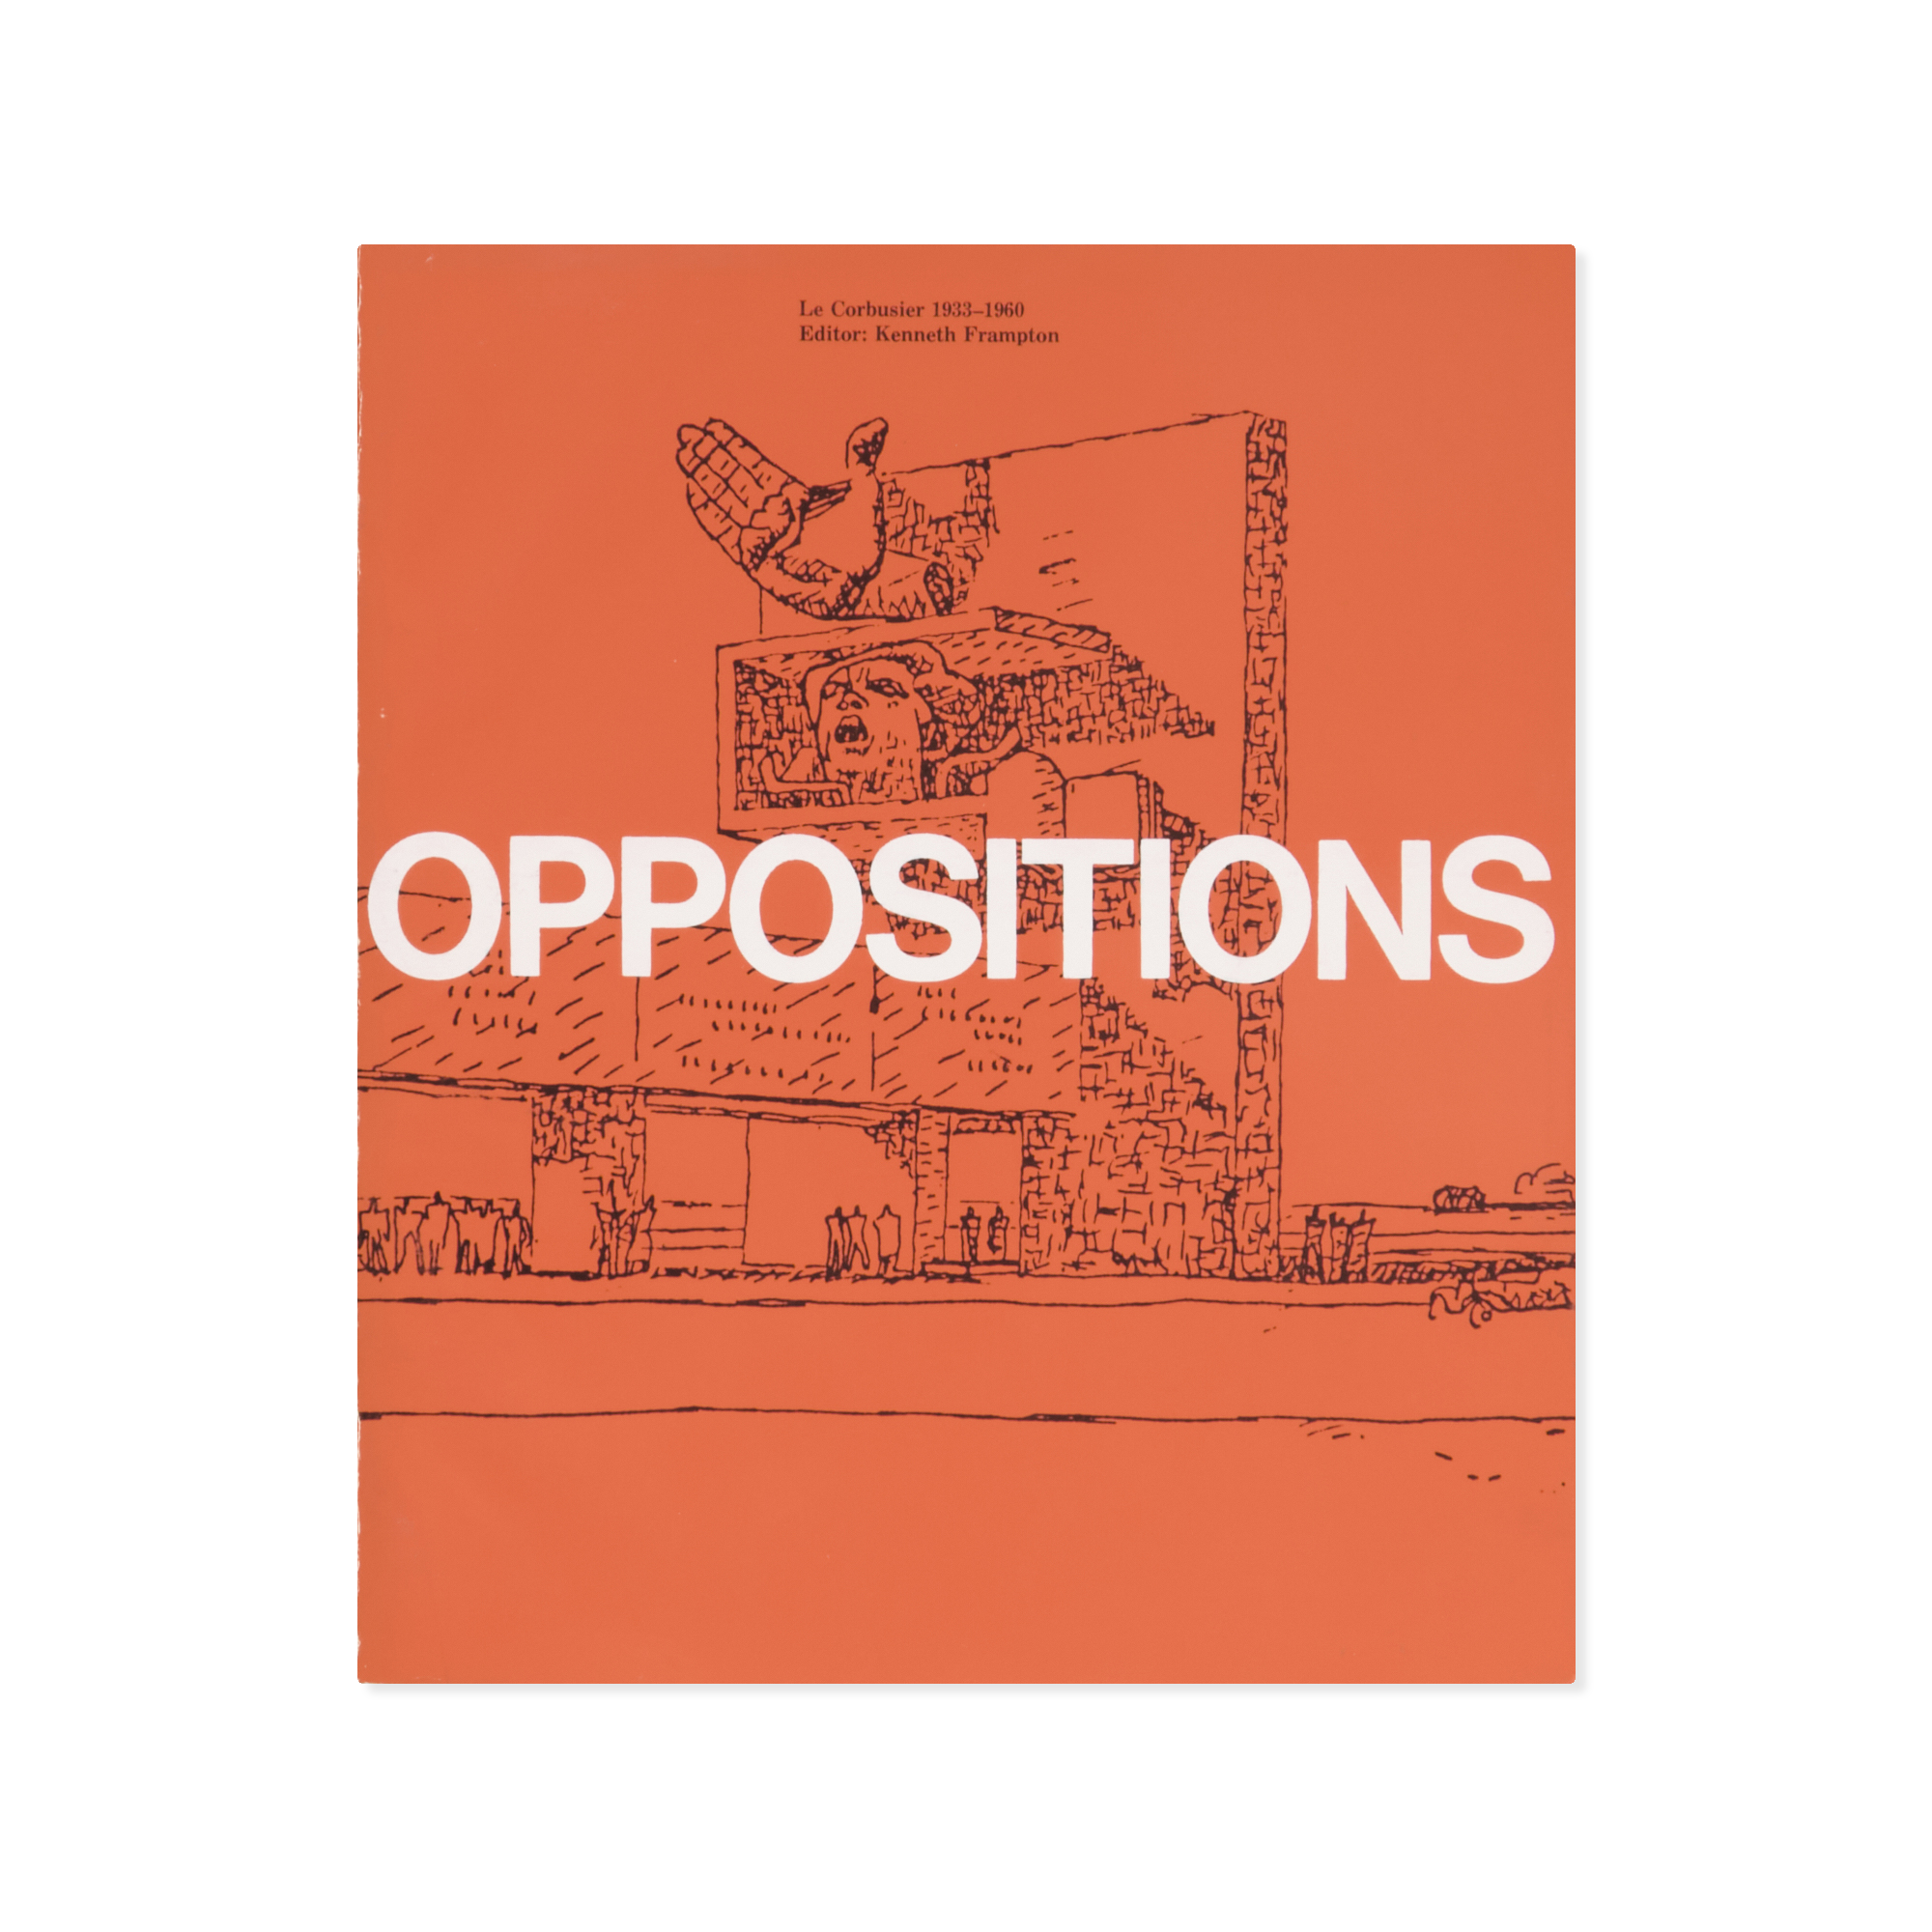 Le Corbusier / Kenneth Frampton — Oppositions 19/20